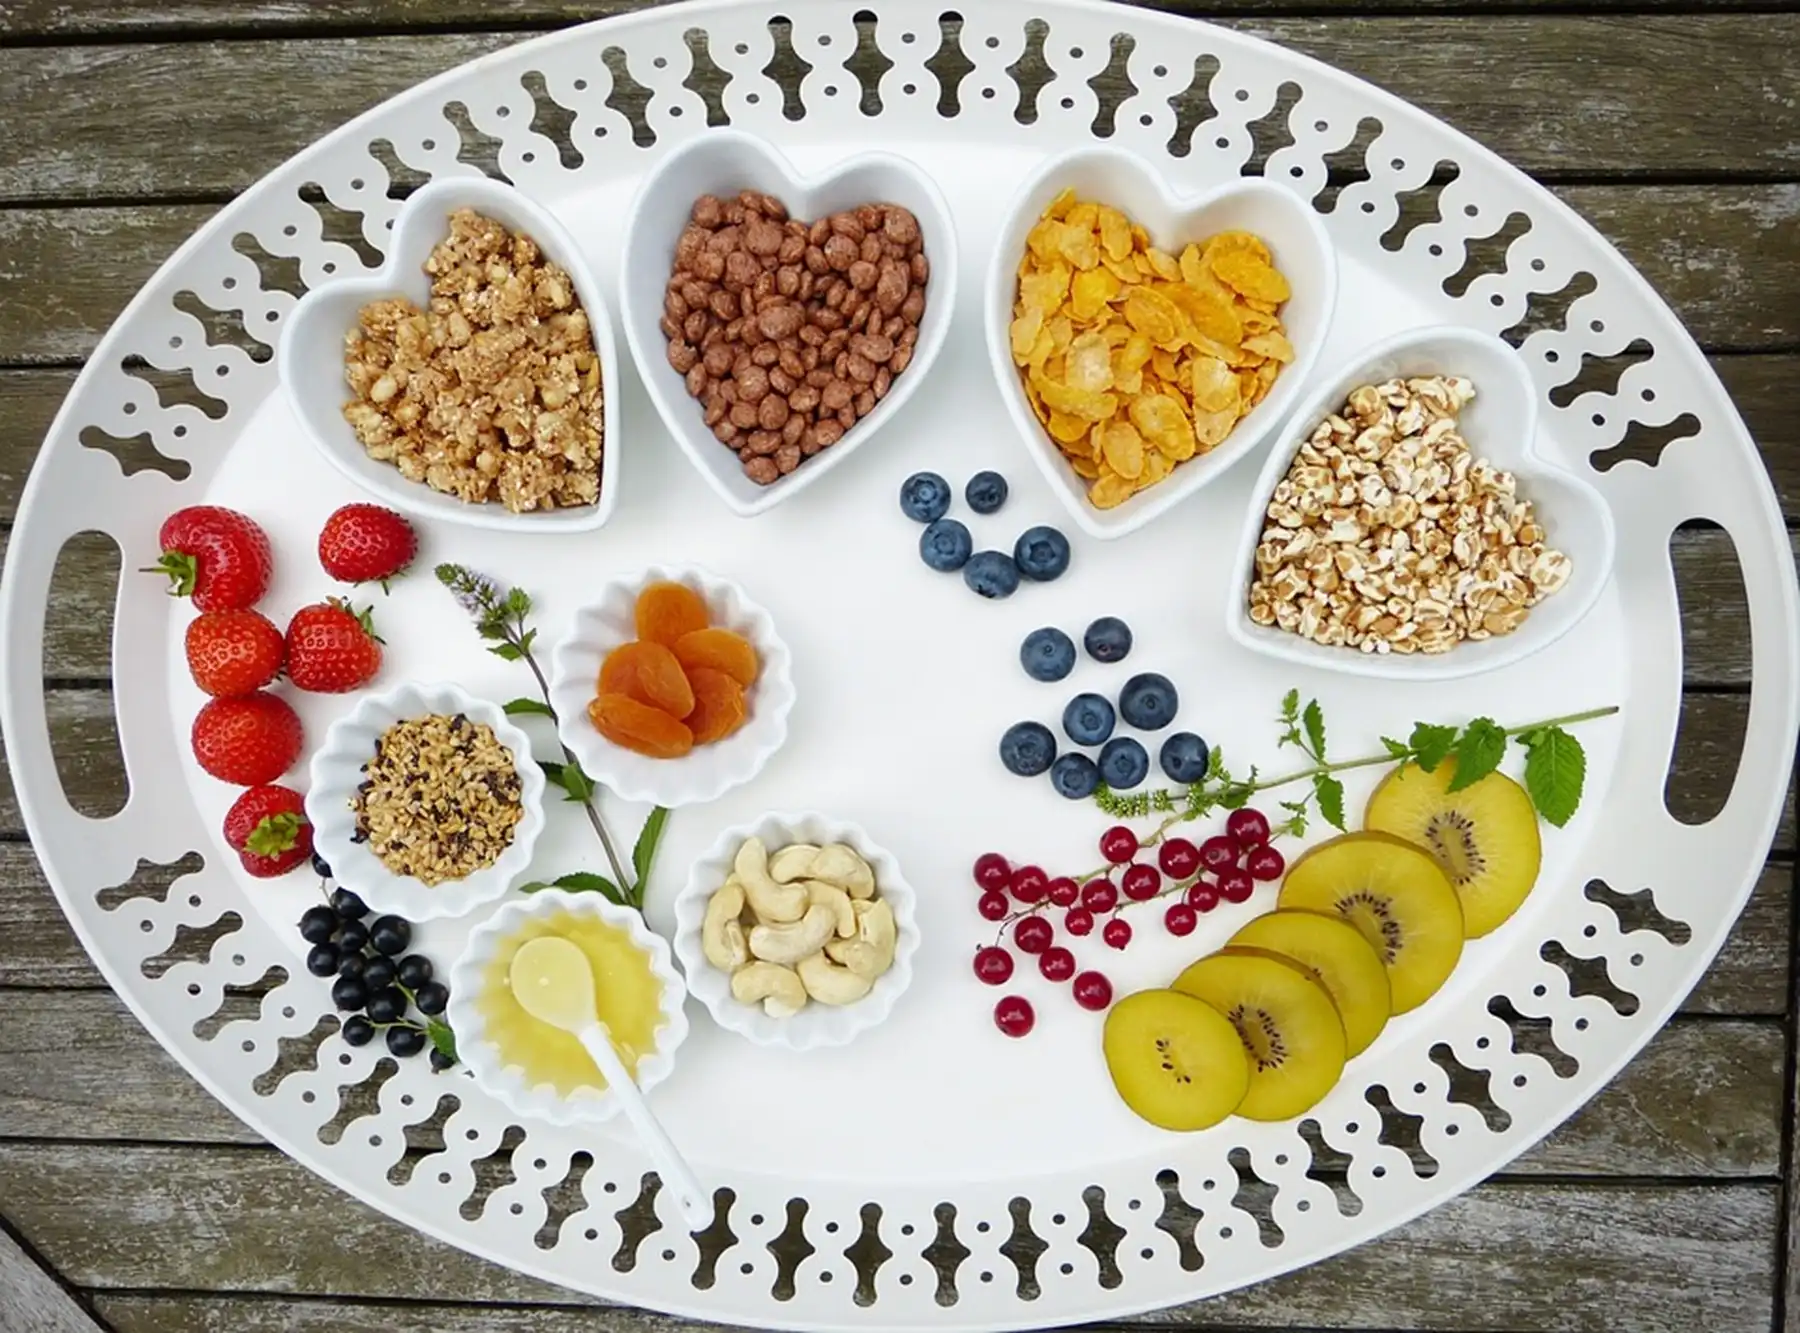 Platter of healthy food